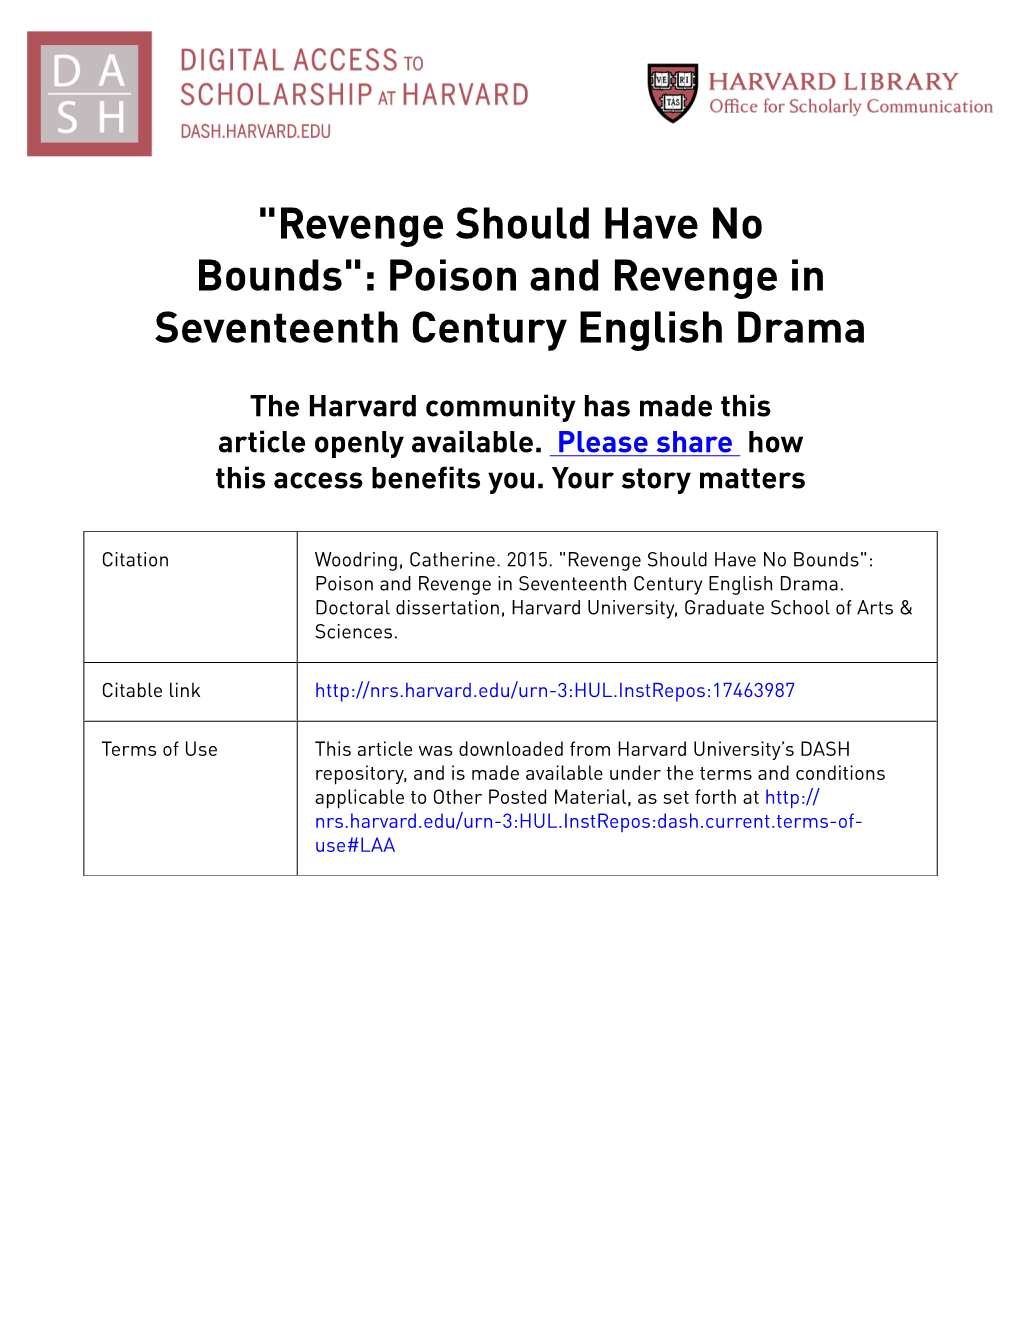 Poison and Revenge in Seventeenth Century English Drama